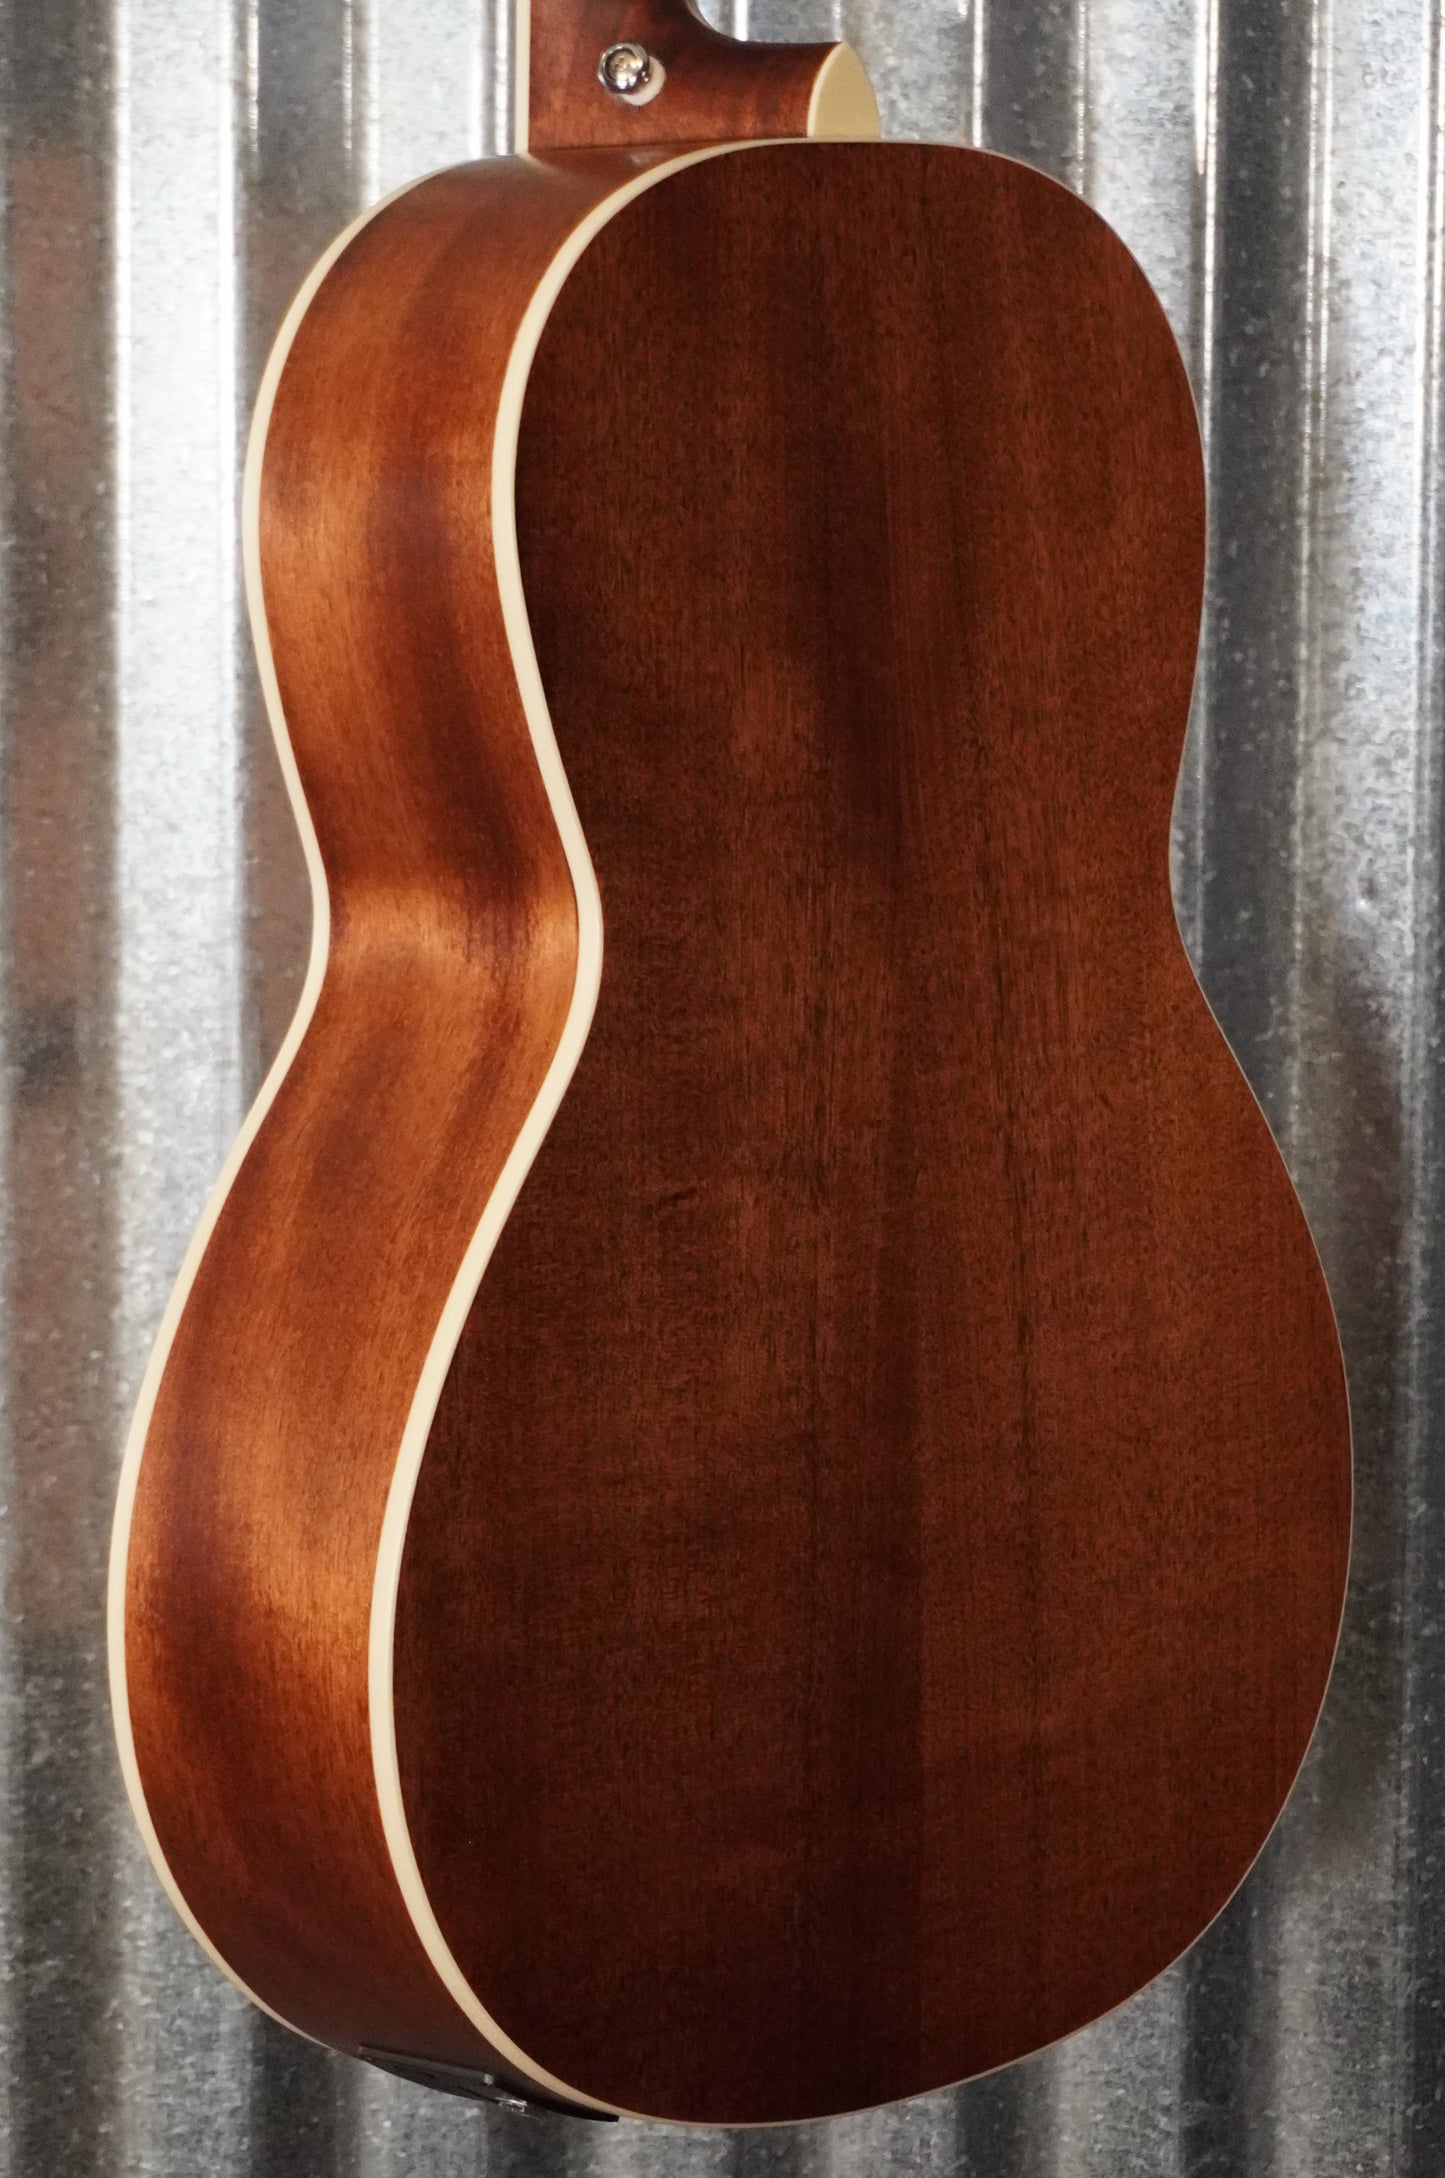 PRS Paul Reed Smith SE P20E LTD ED Acoustic Electric Parlor Lotus Pink Guitar & Bag #1797